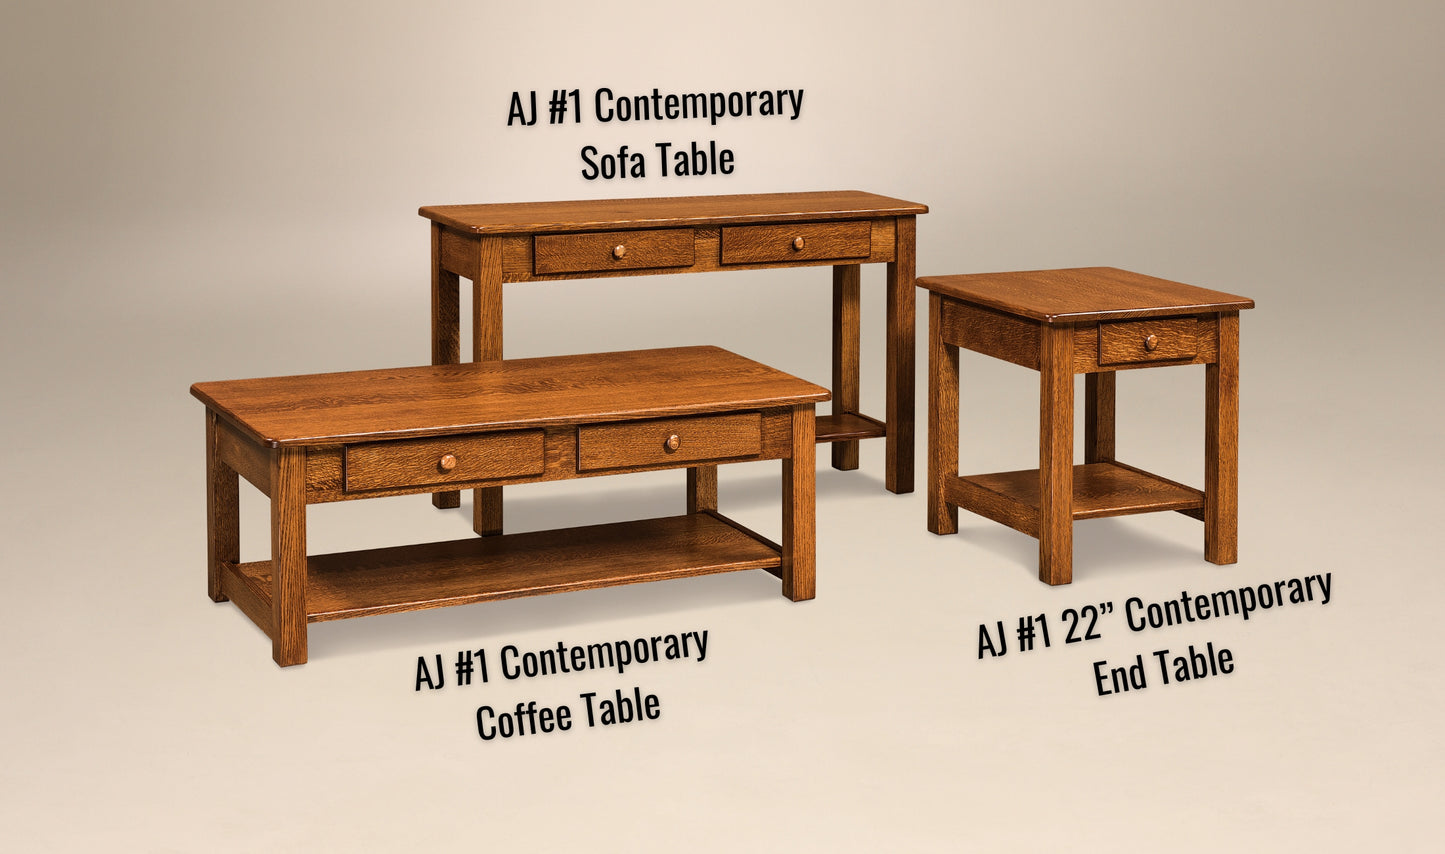 AJ #1 Contemporary Sofa Table